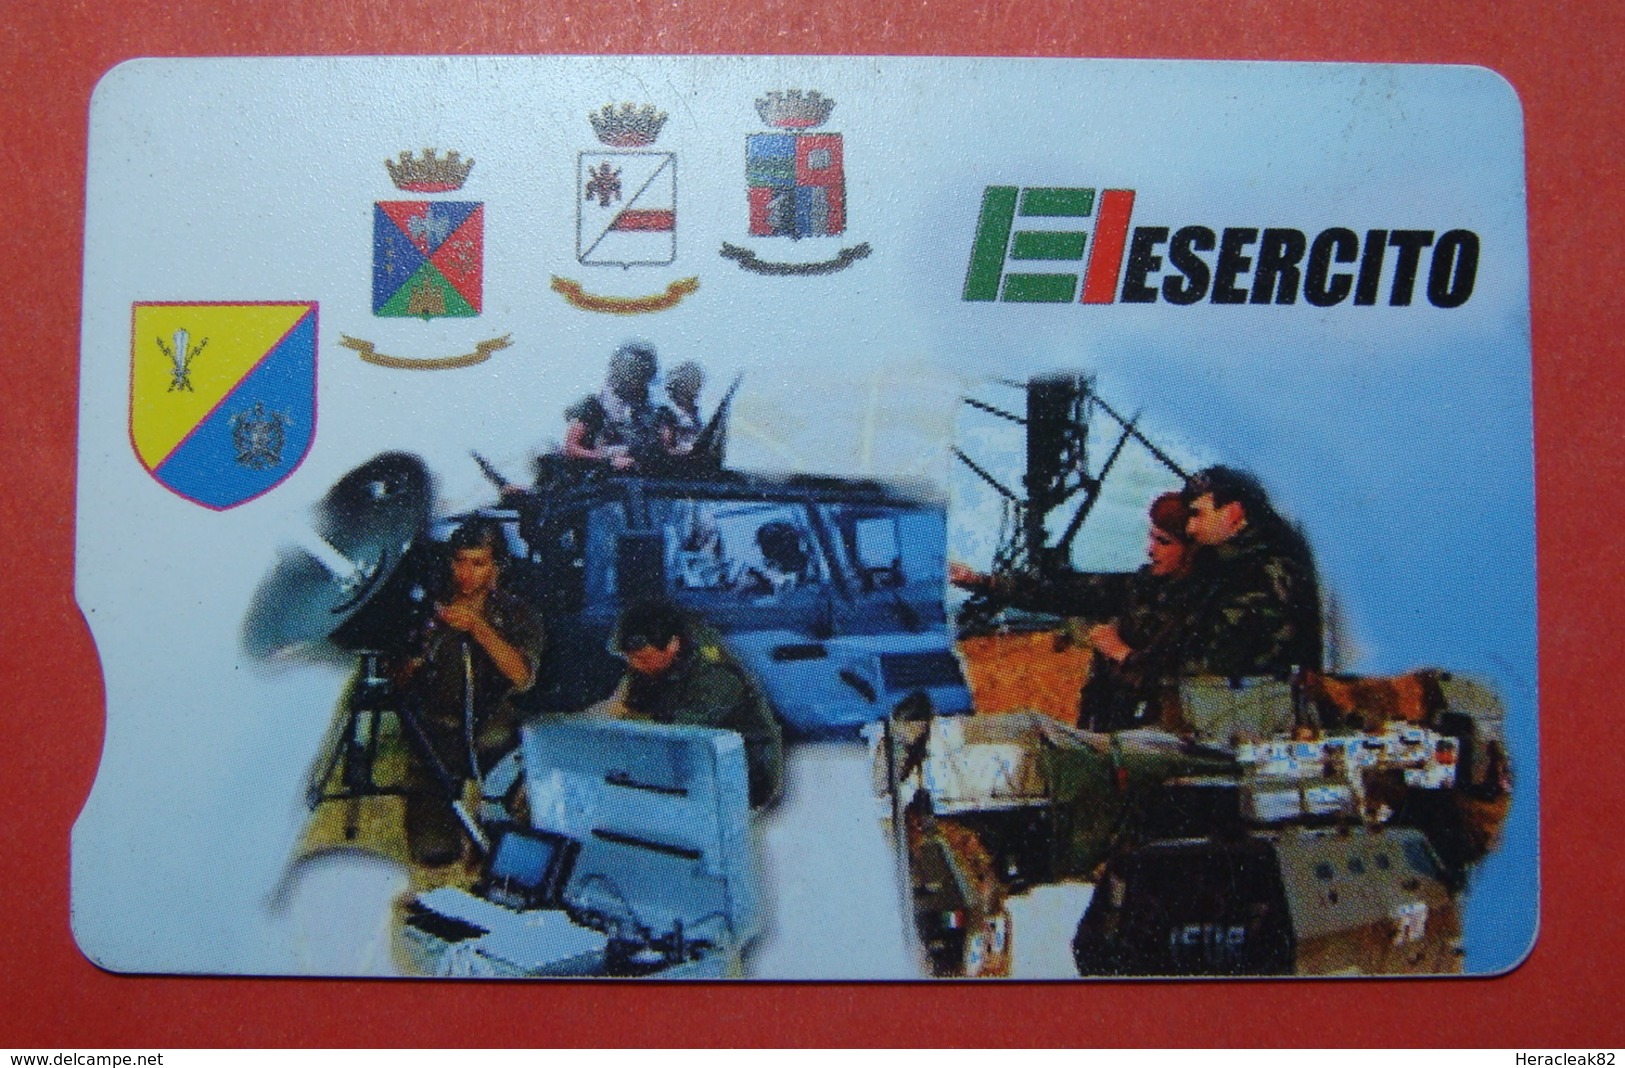 Serie 00085-24, Italian Army In Kosovo Chip Phone CARD 10 Euro Used Operator TELECOM ITALIA *Tank, Soldiers, Satellite* - Kosovo